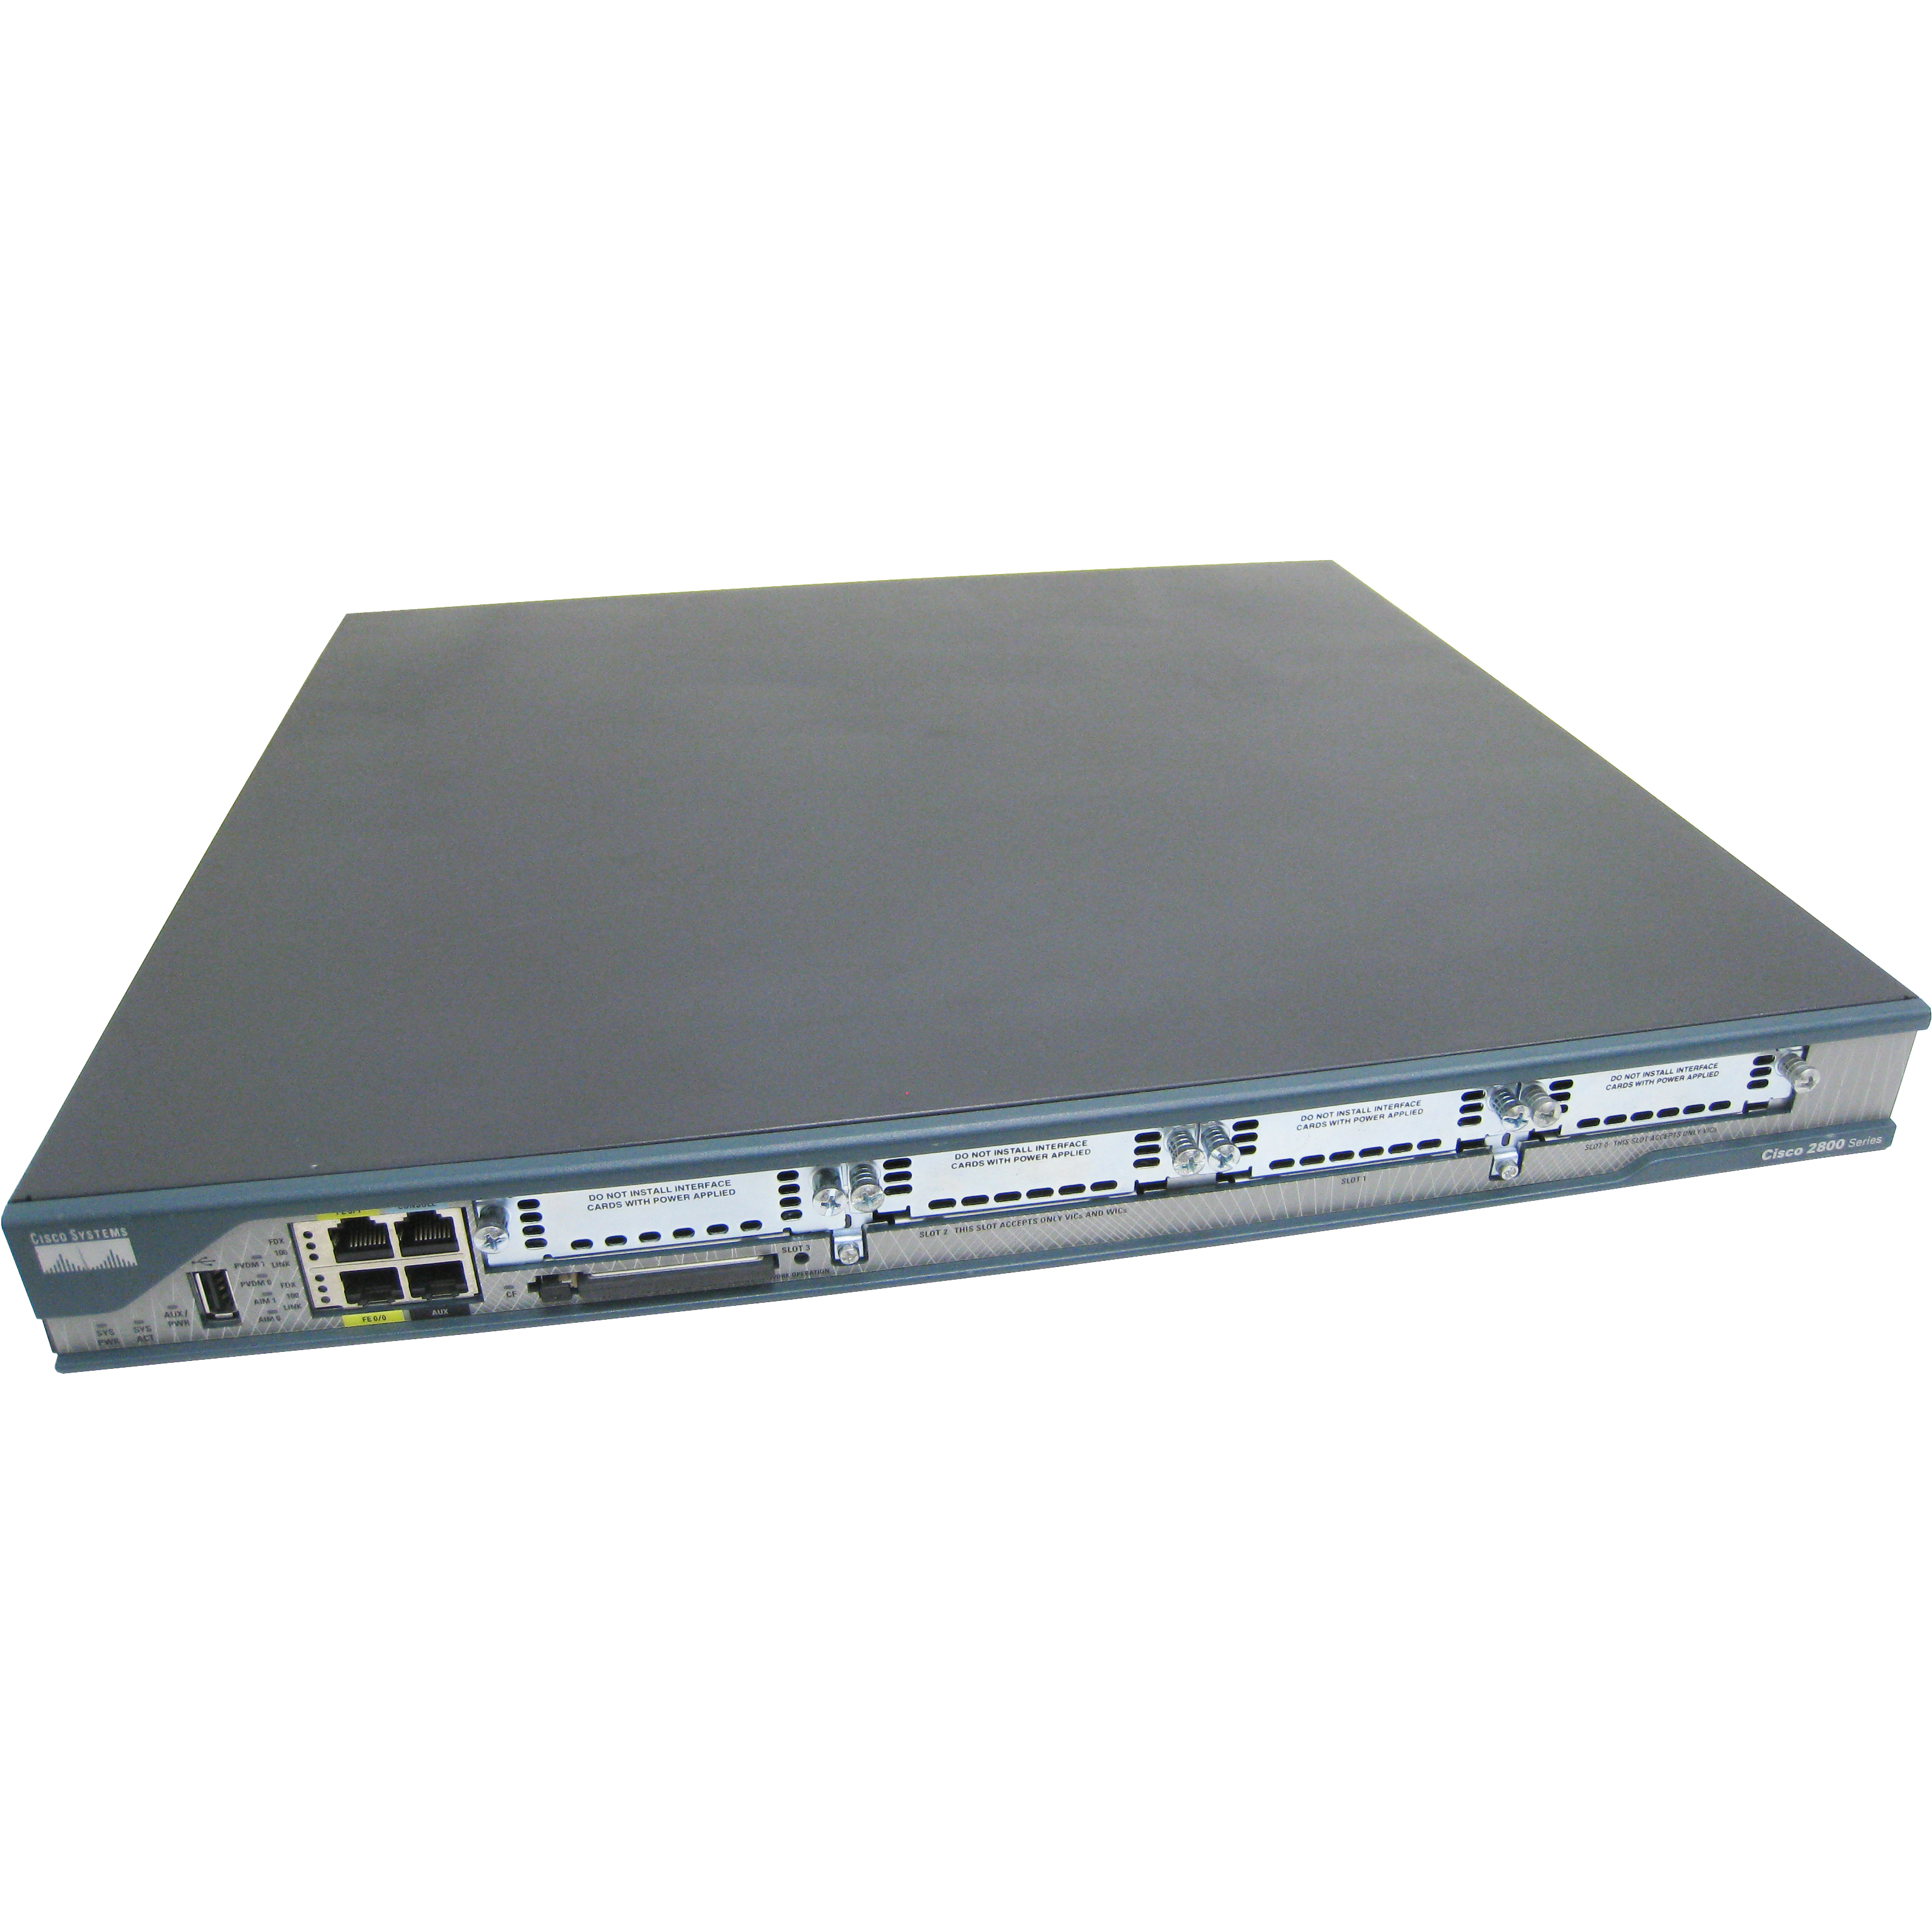 Cisco C2801-H-VSEC/K9-EPII+